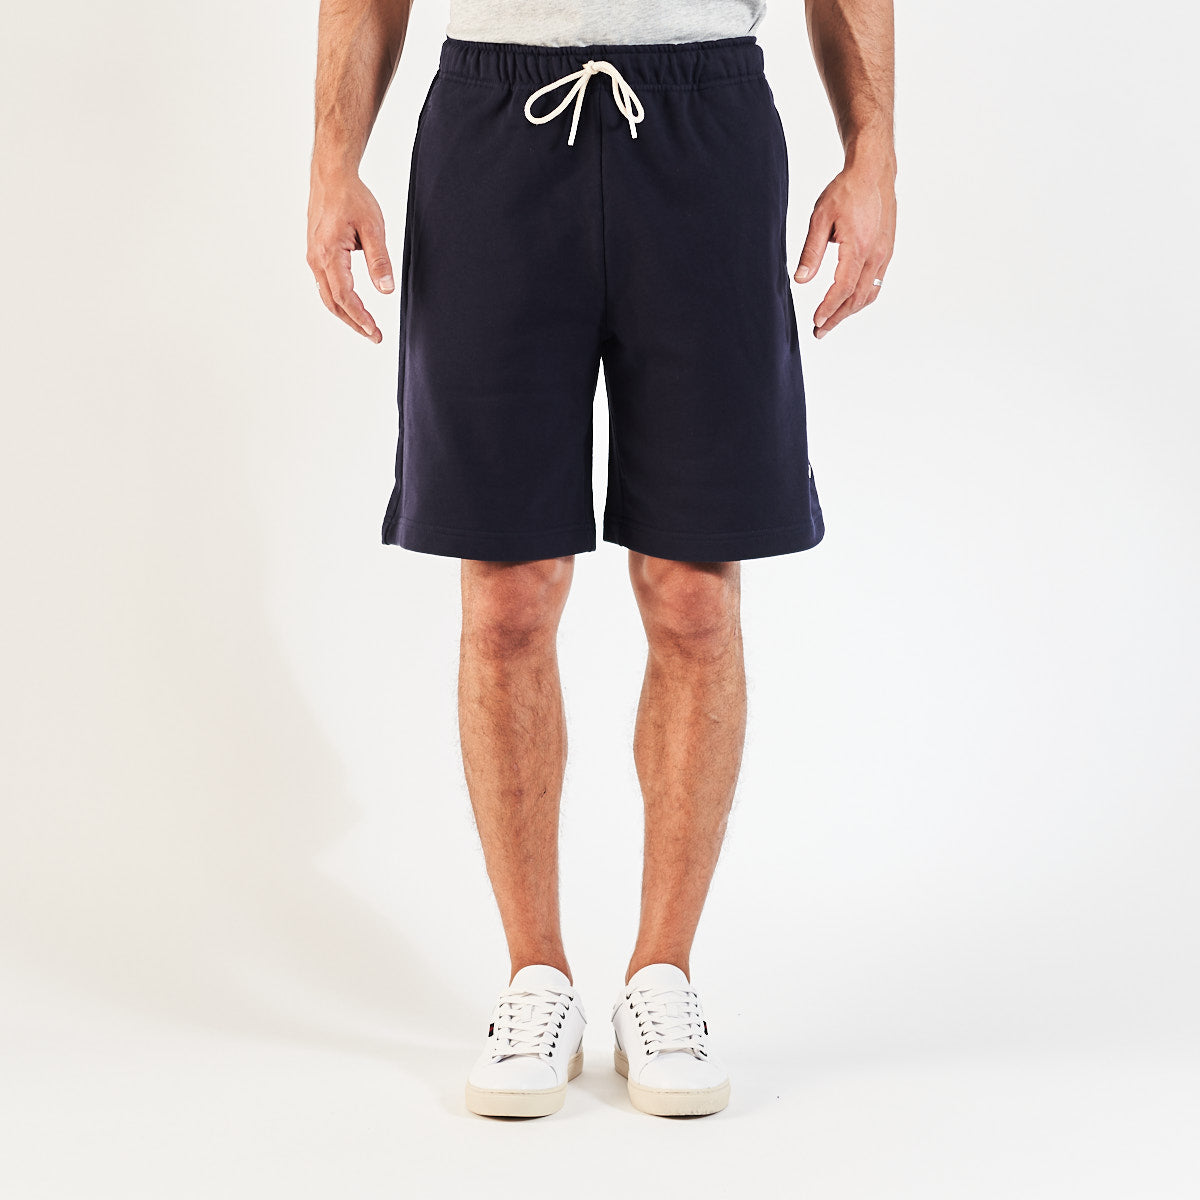 Pantalón corto azul marino, hombre, short algodón Karraway Robe Kappa